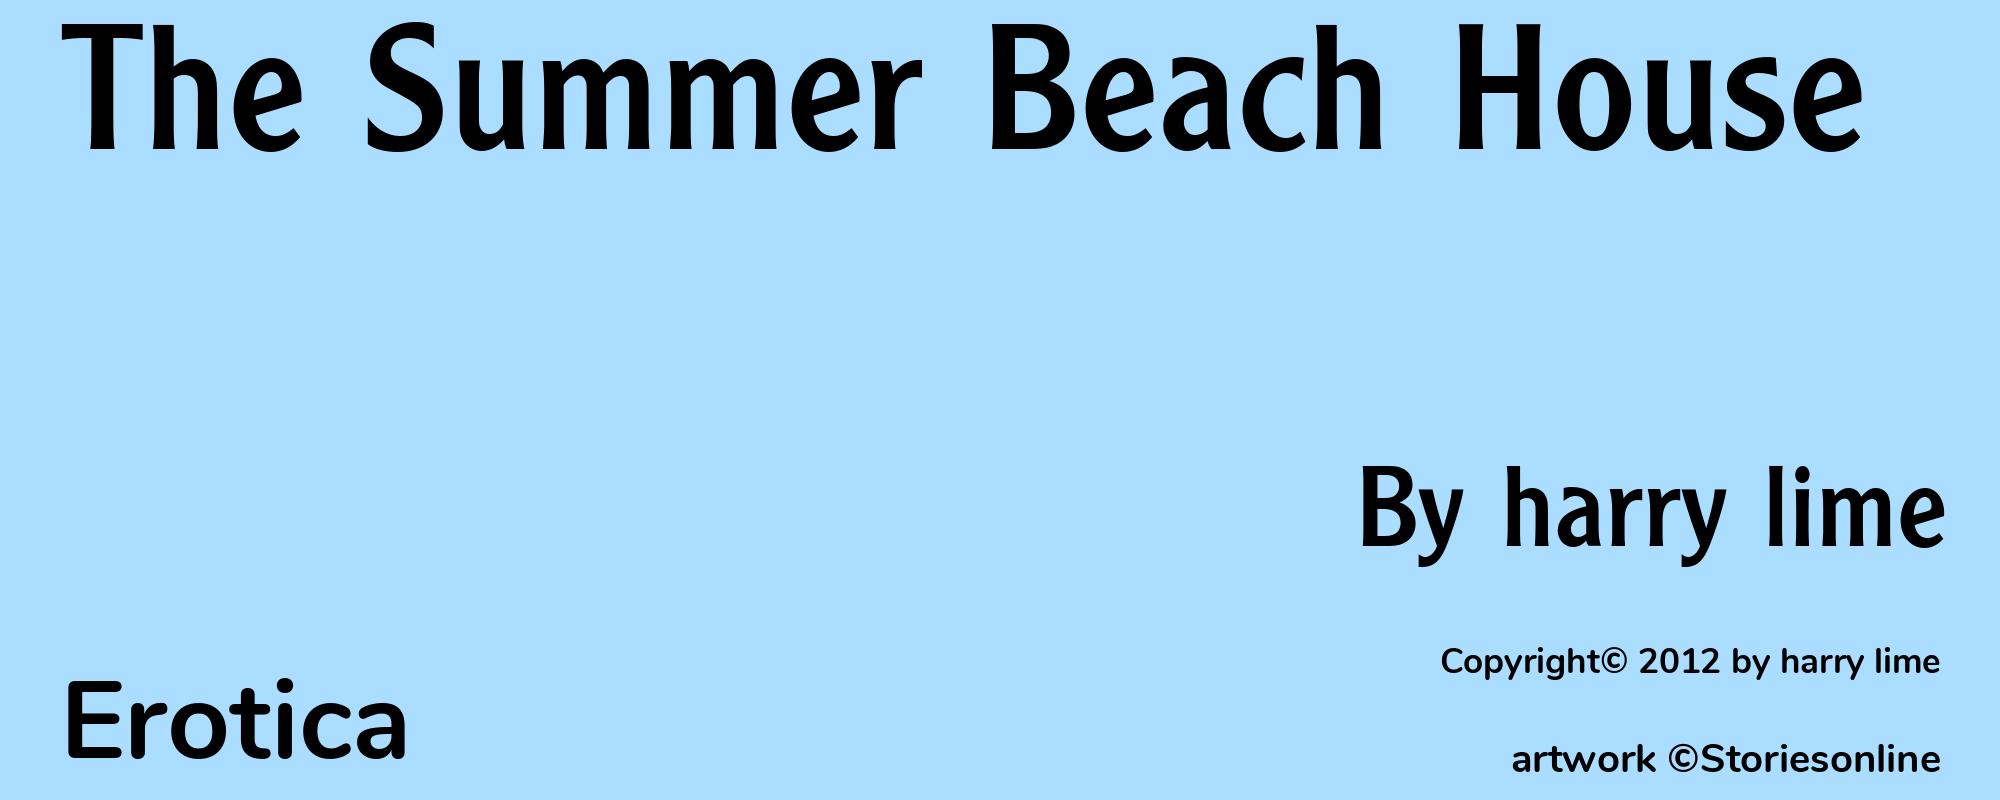 The Summer Beach House - Cover